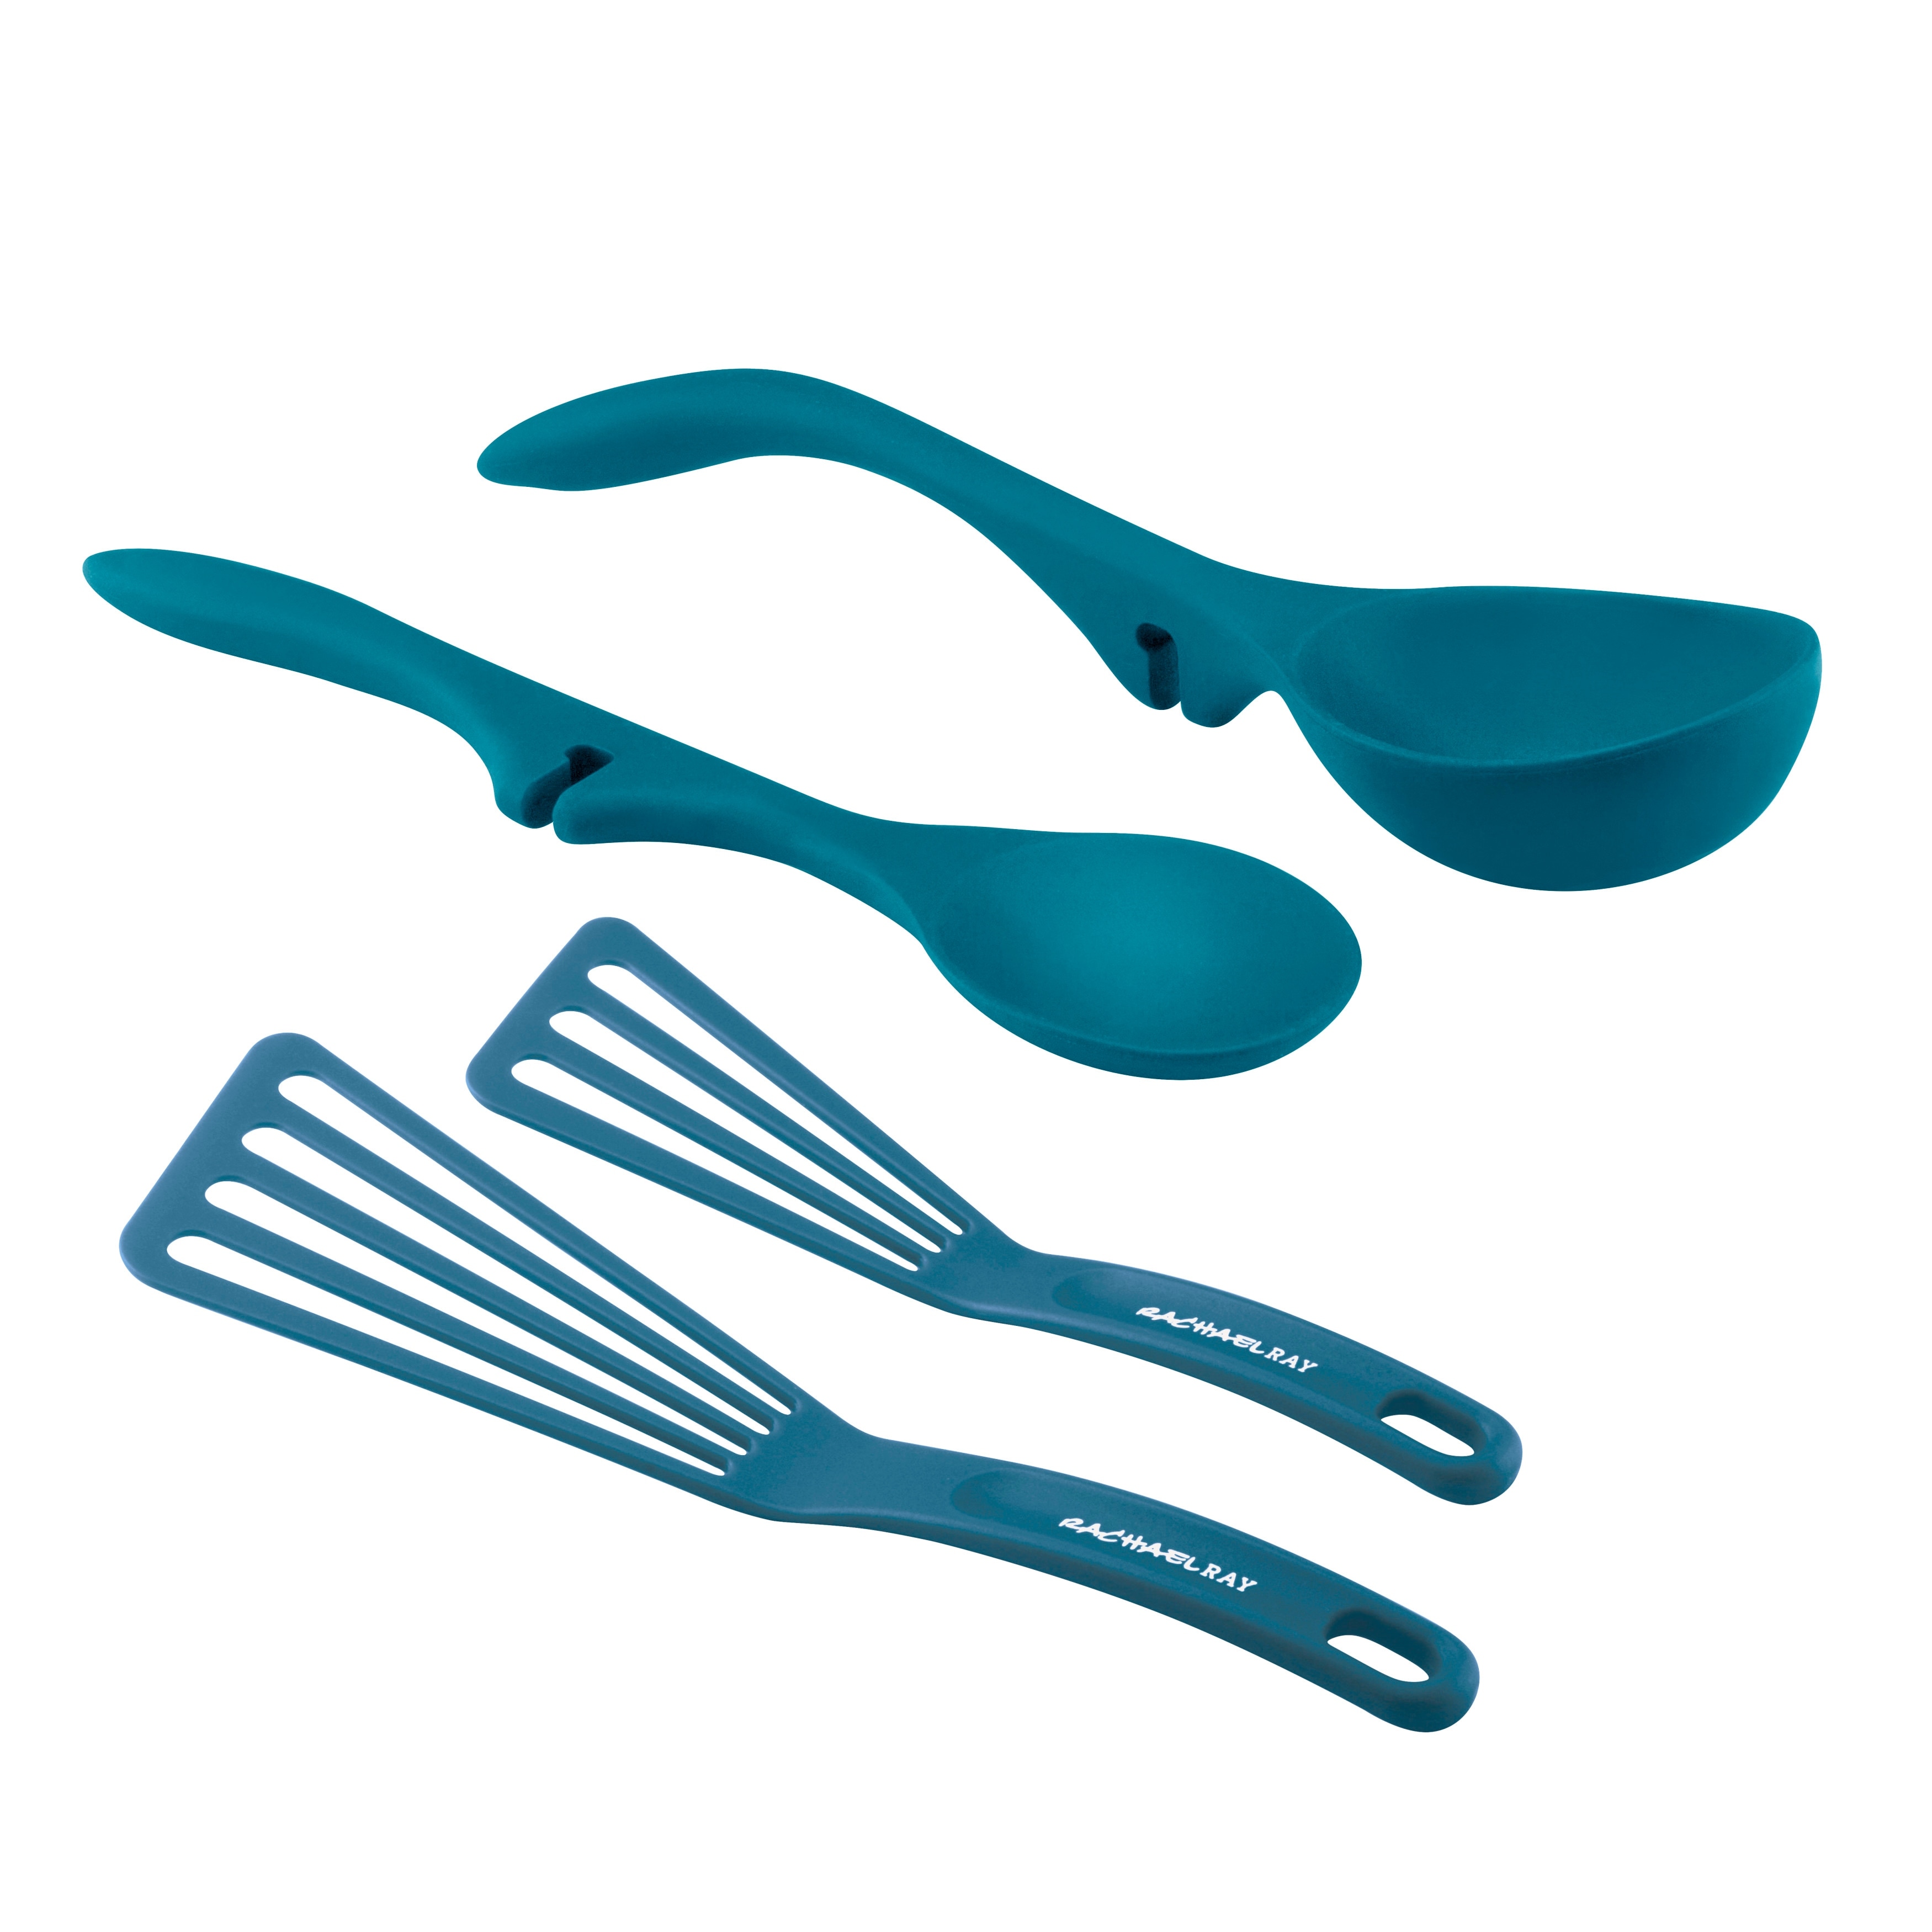 Kitchen Spoon Set, Tupperware Ladle, Mini Ladle, Serving Spoon, 3